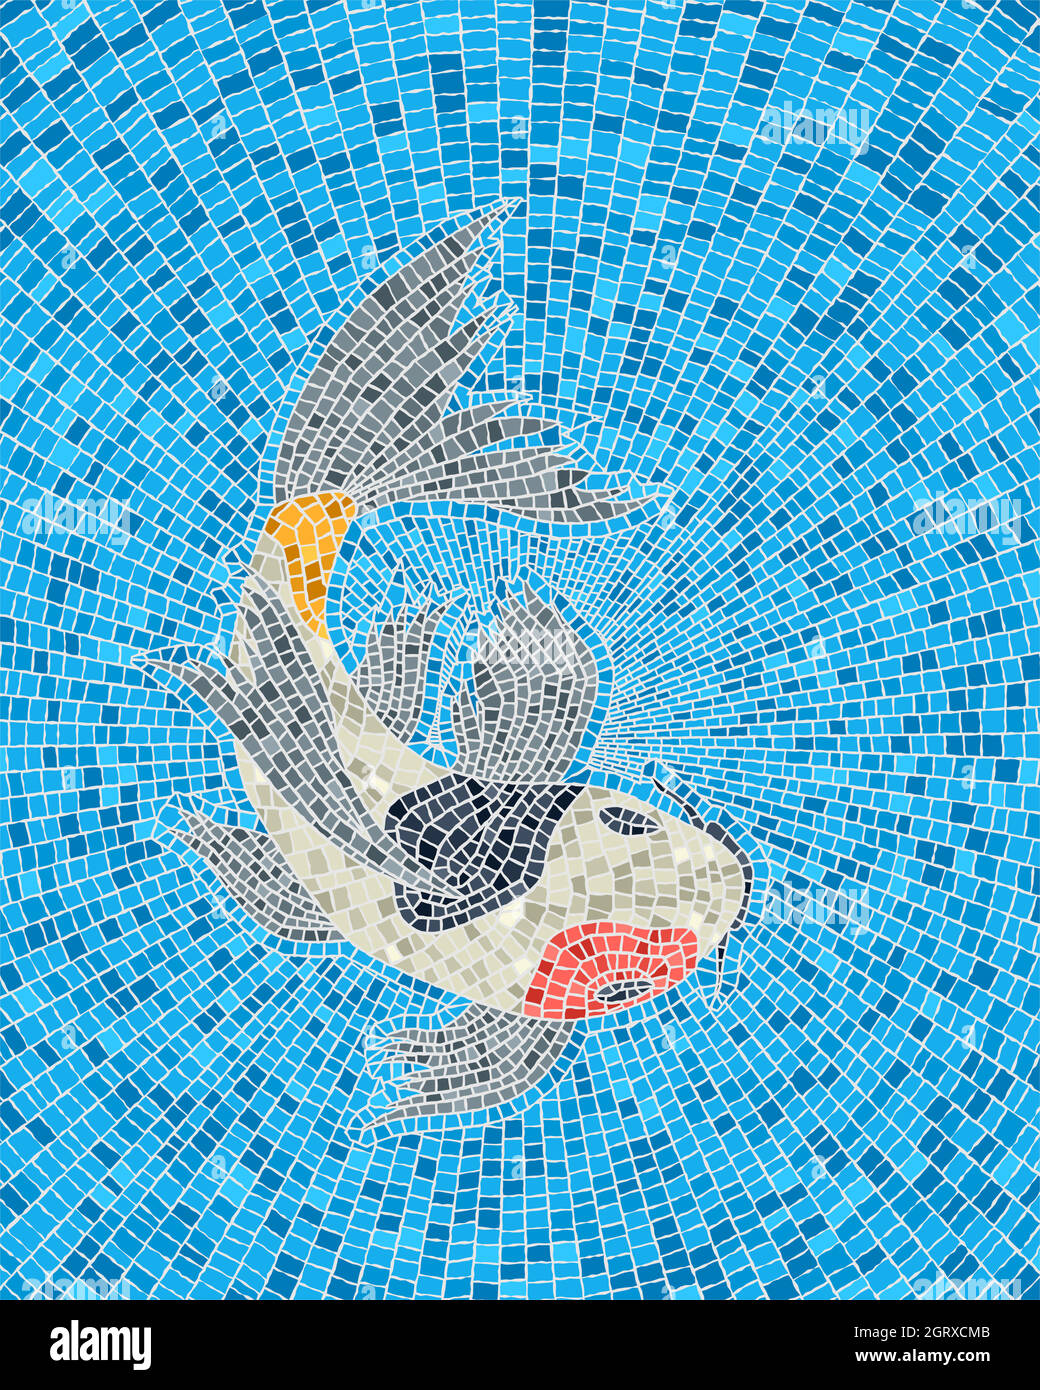 Koi carp fish mosaic Stock Vector